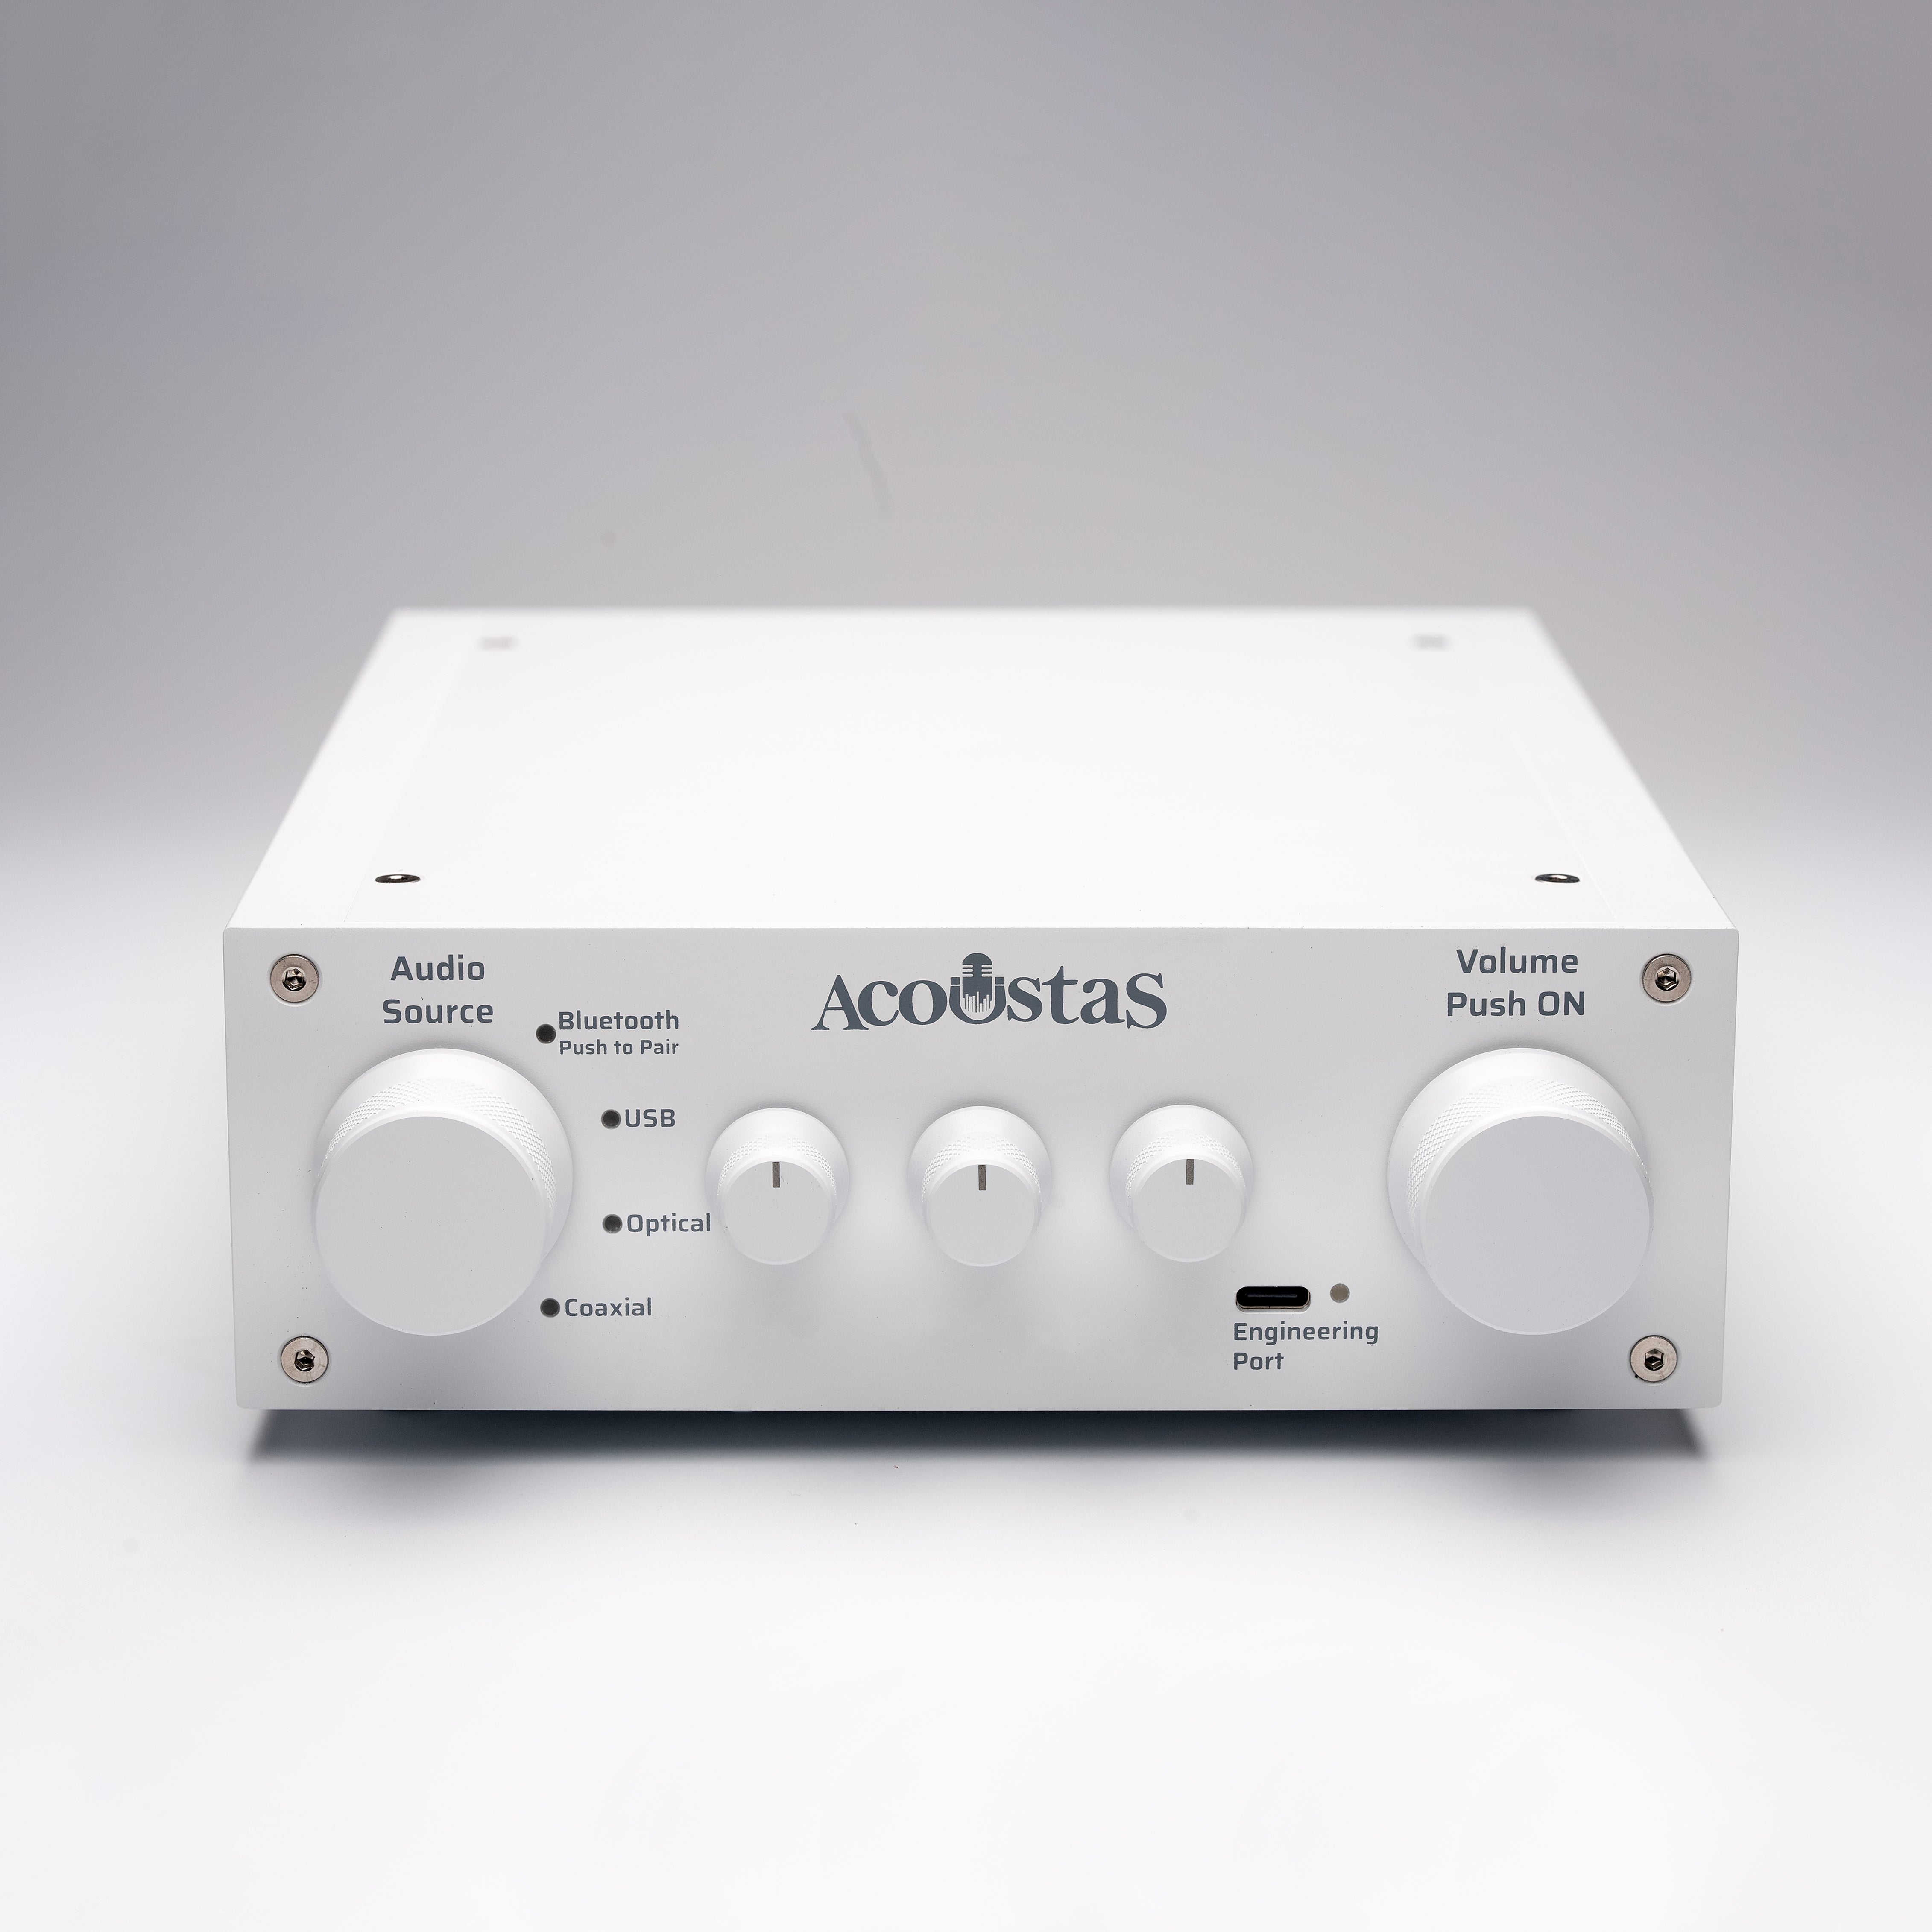 AC650 White Snow - DSP Amplifier